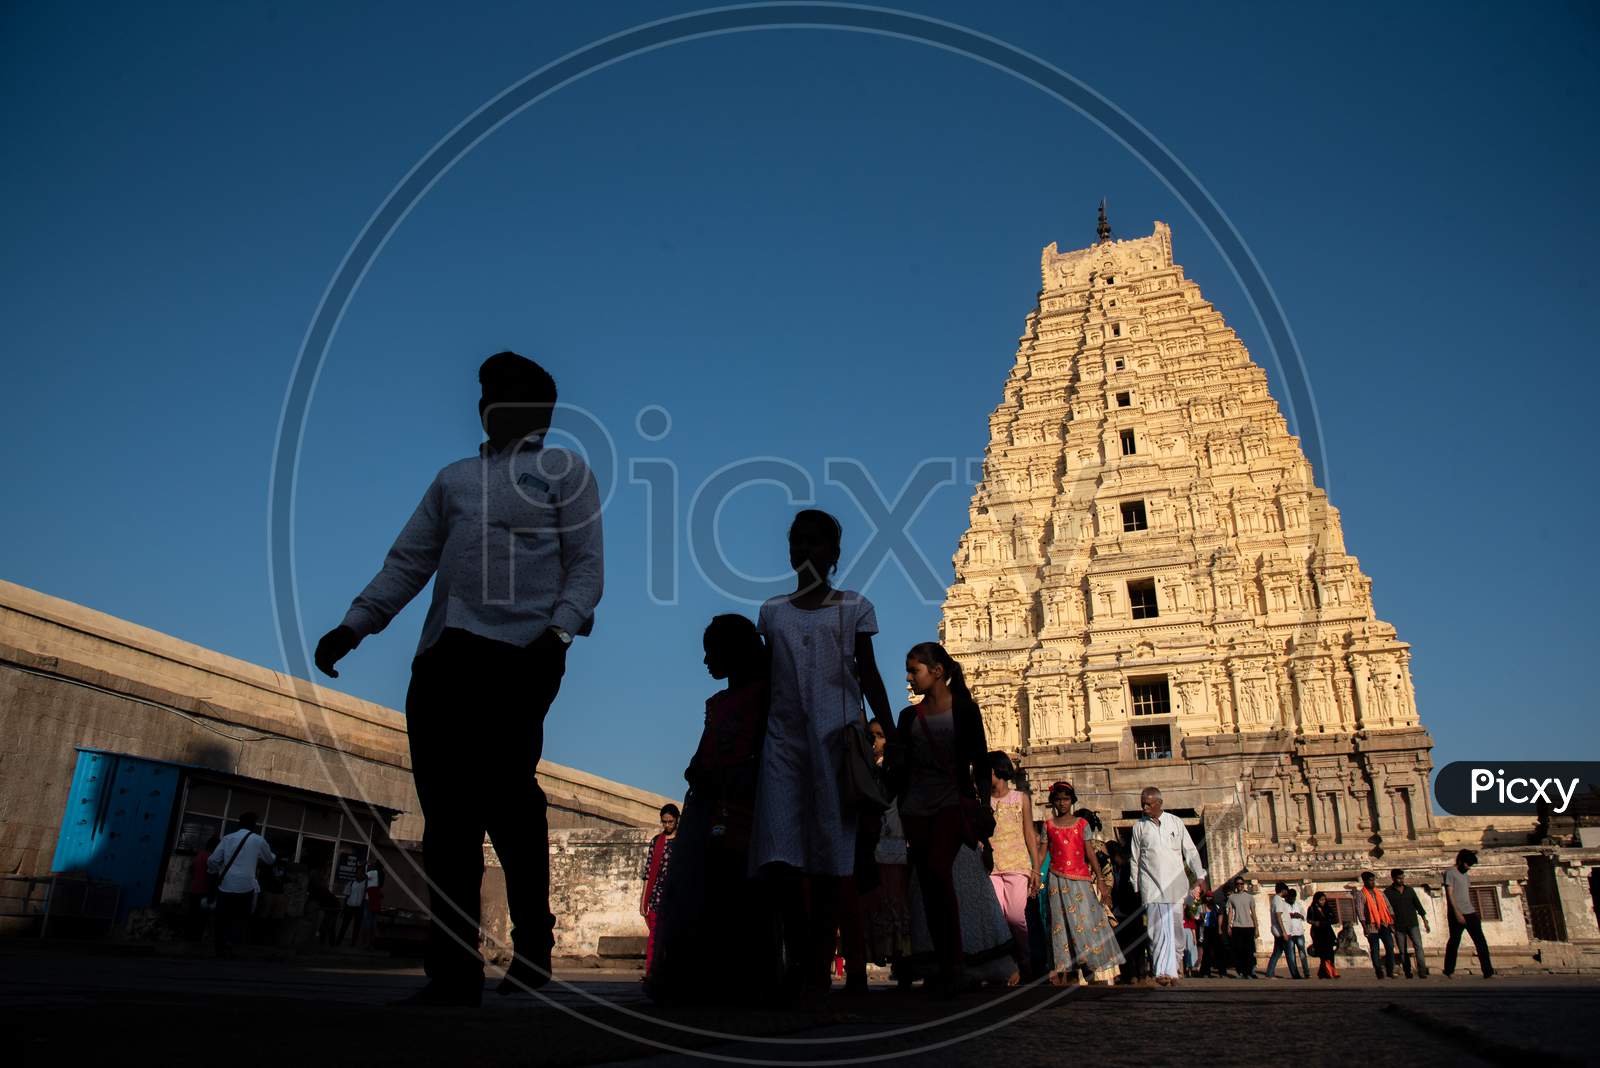 Selective Focus on Virupaksha Temple Gopuram with People in Foreground